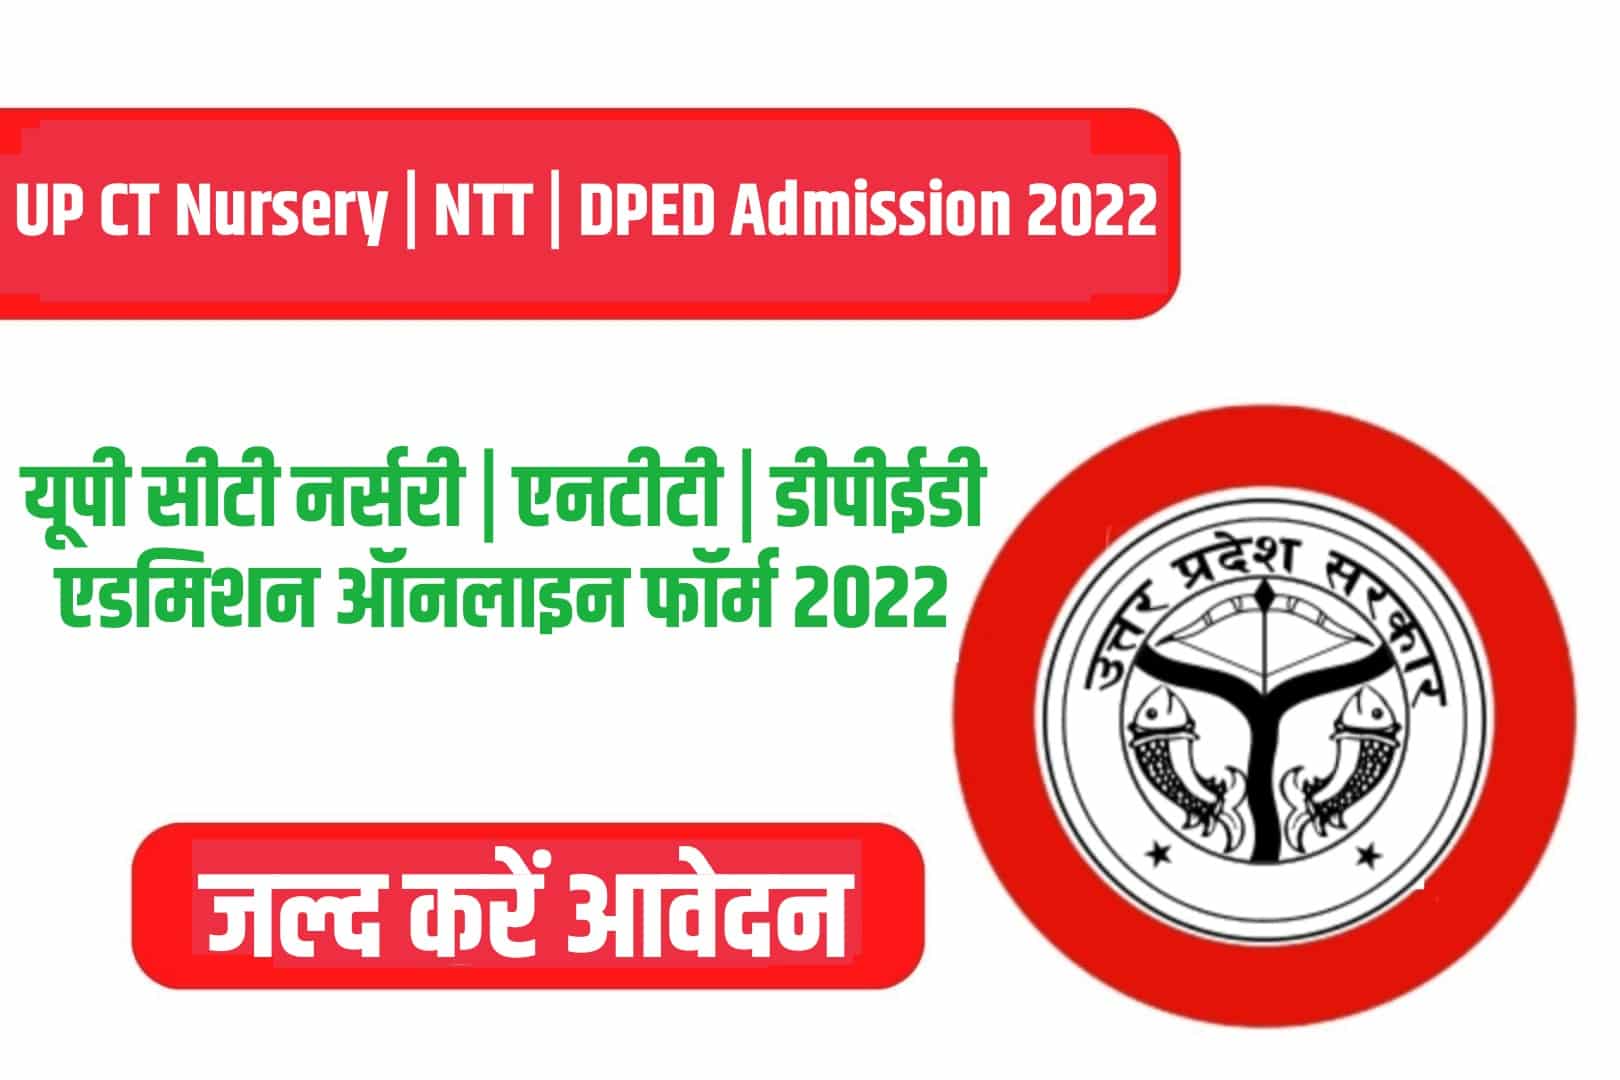 UP CT Nursery | NTT | DPED Admission Online Form 2022 | यूपी सीटी नर्सरी | एनटीटी | डीपीईडी एडमिशन ऑनलाइन फॉर्म 2022